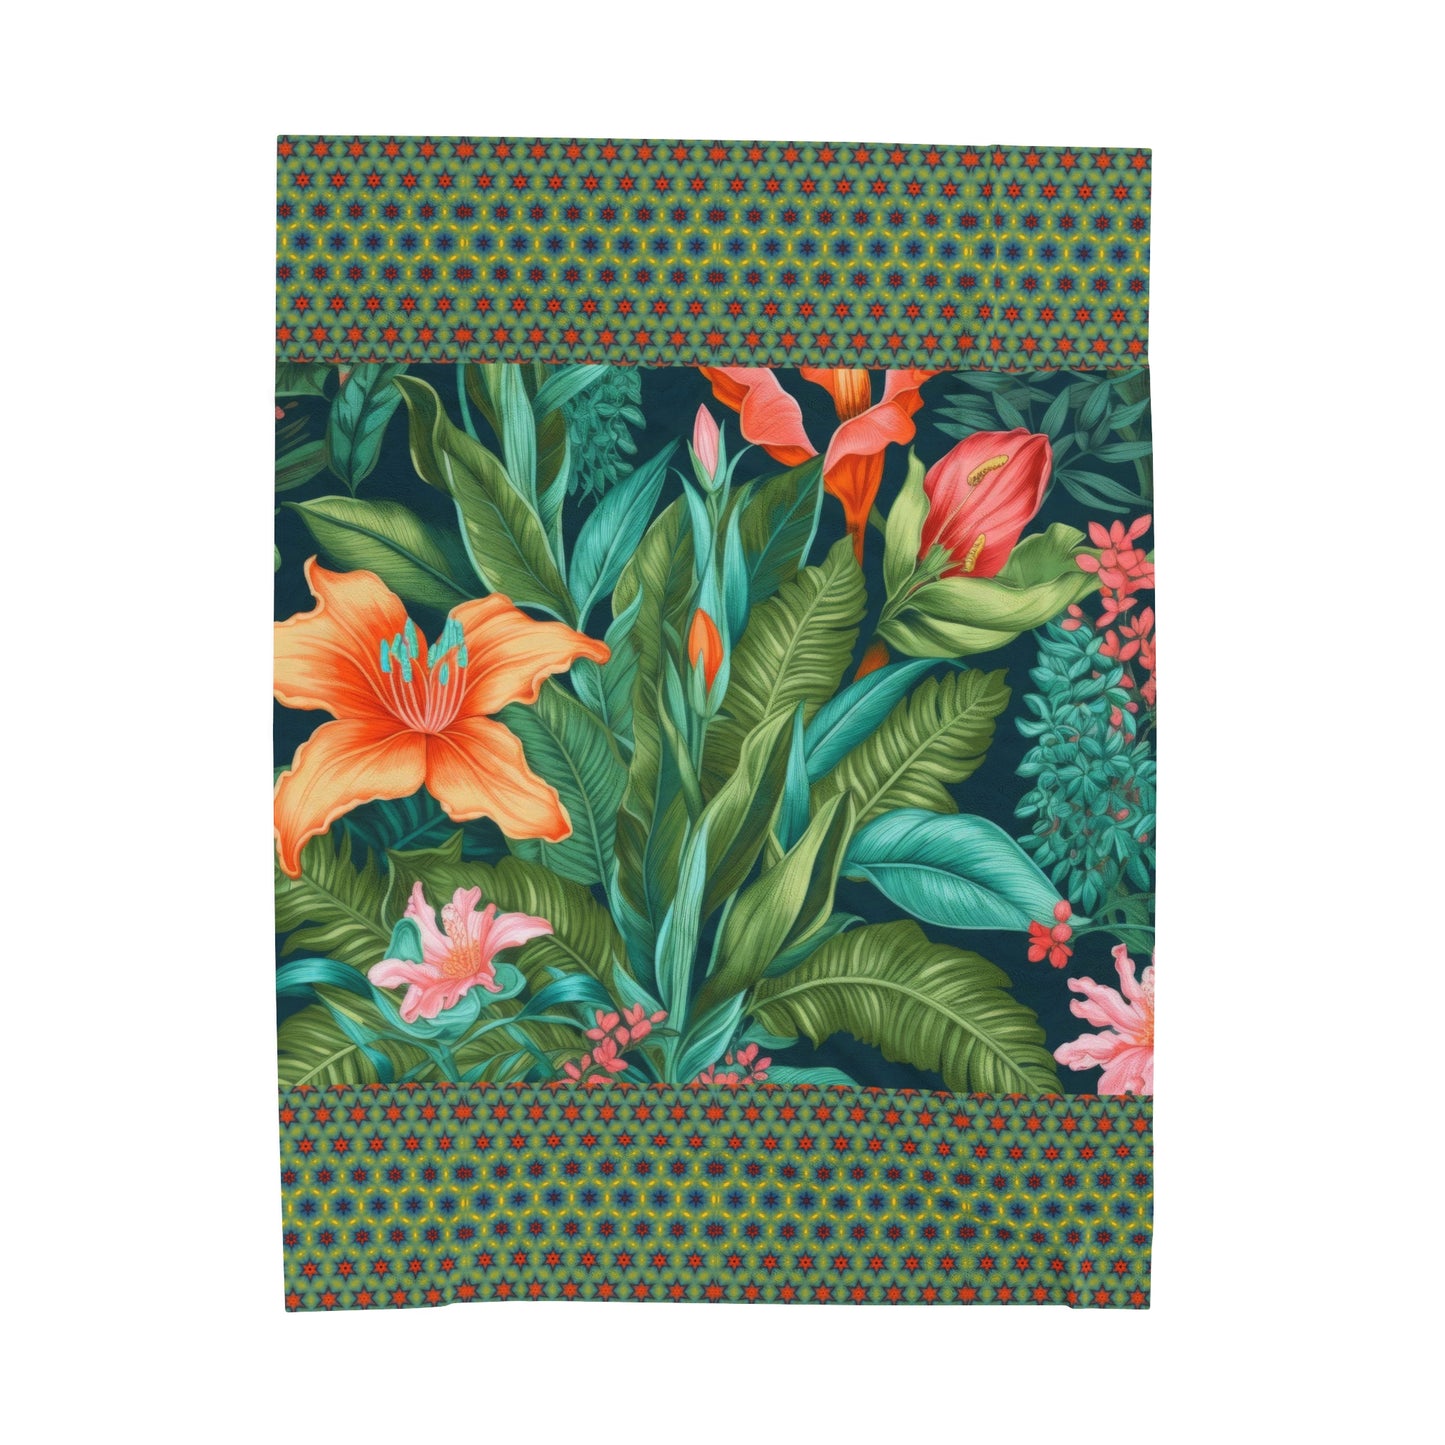 Exotic Flowers & Patterns Throw Blanket